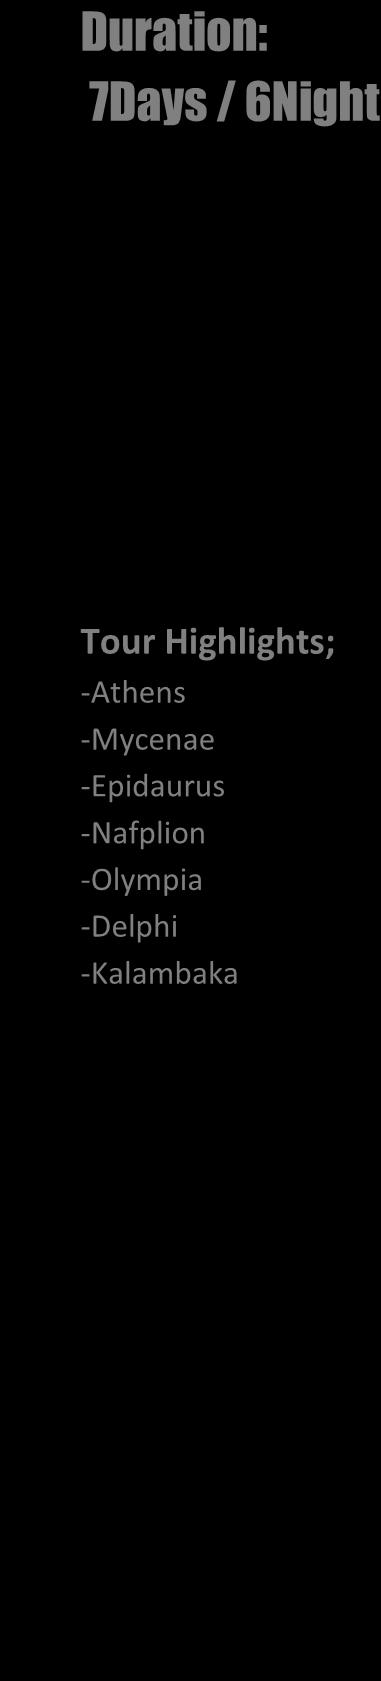 Tour Highlights; -Athens -Mycenae -Epidaurus -Nafplion -Olympia -Delphi -Kalambaka To